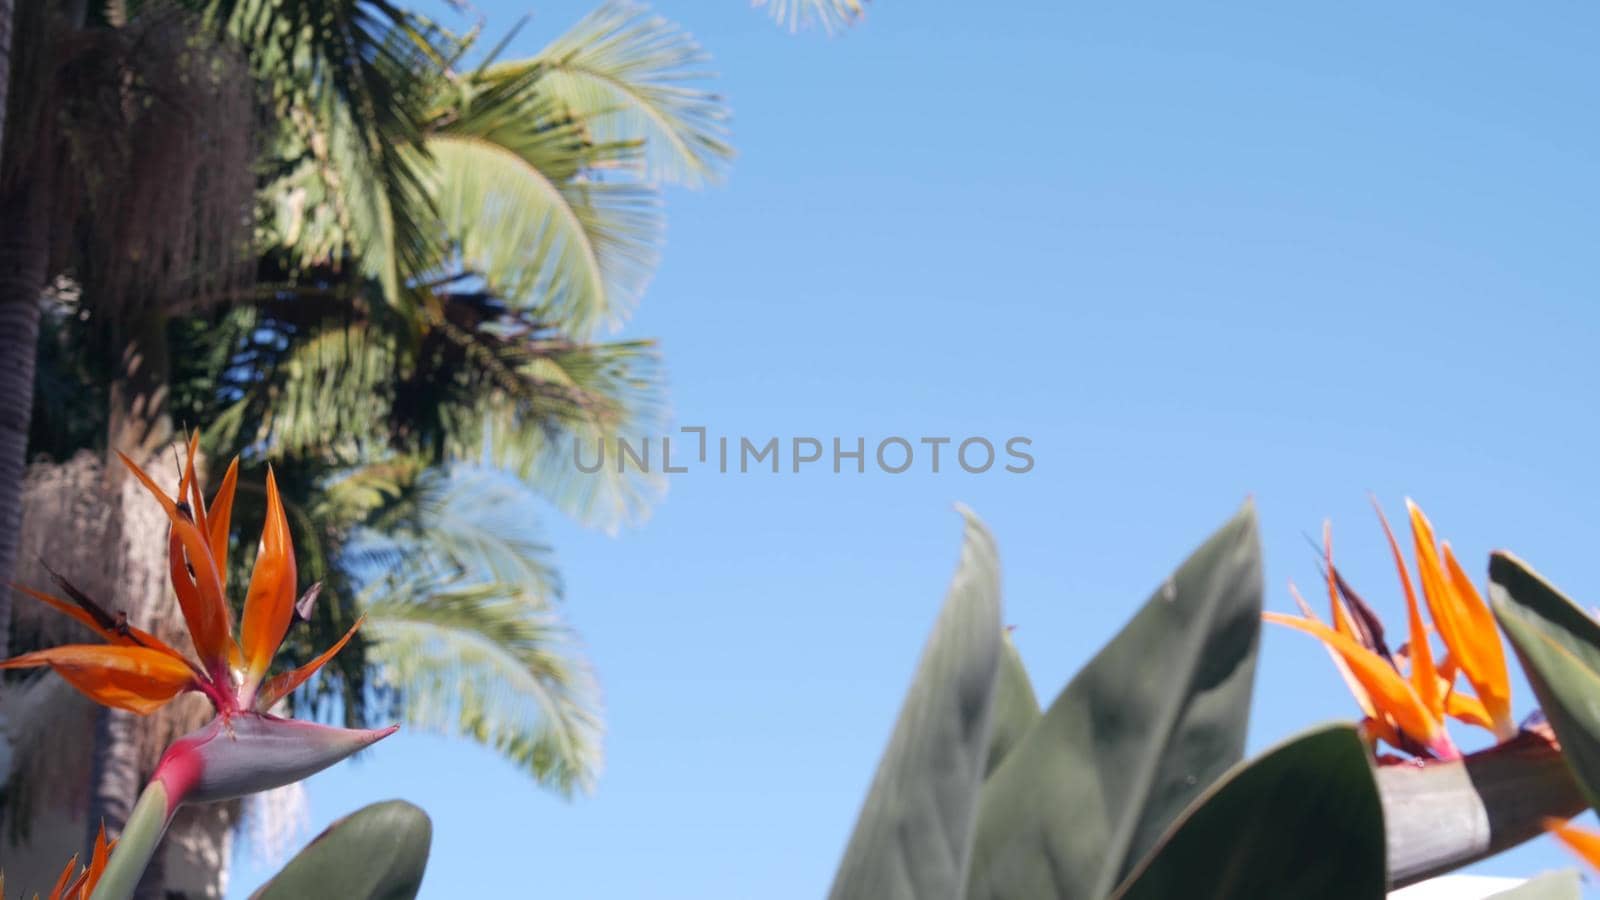 Strelitzia bird of paradise orange flower bloom, crane flower inflorescence, exotic tropical blossom in sunny garden. California flora, USA. Botanical floral background, palm tree, blue clear sky.